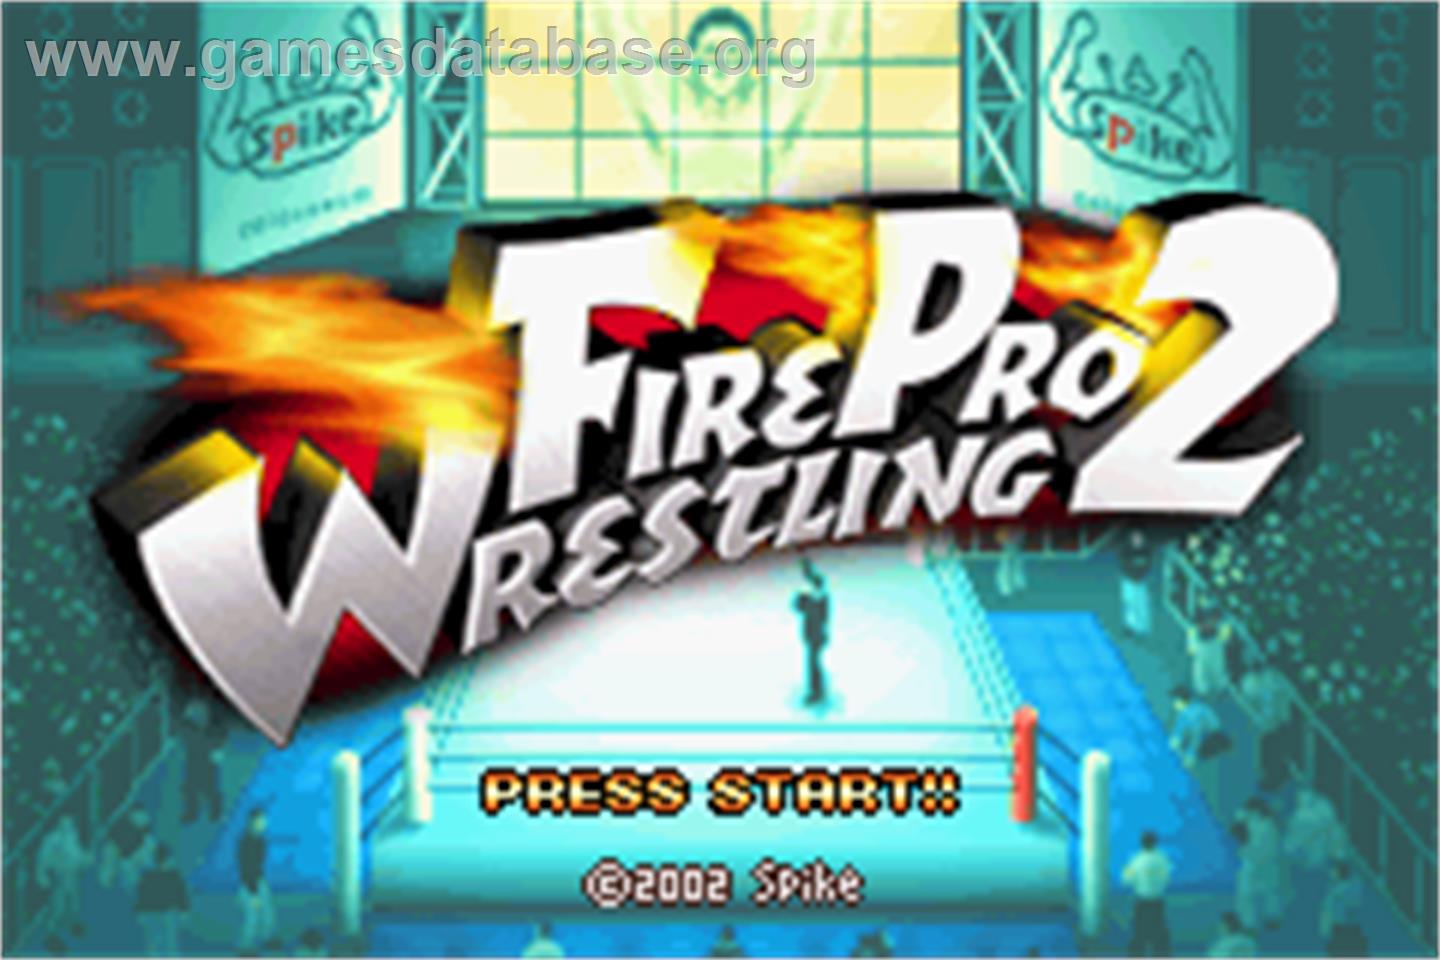 Fire Pro Wrestling 2 - Nintendo Game Boy Advance - Artwork - Title Screen